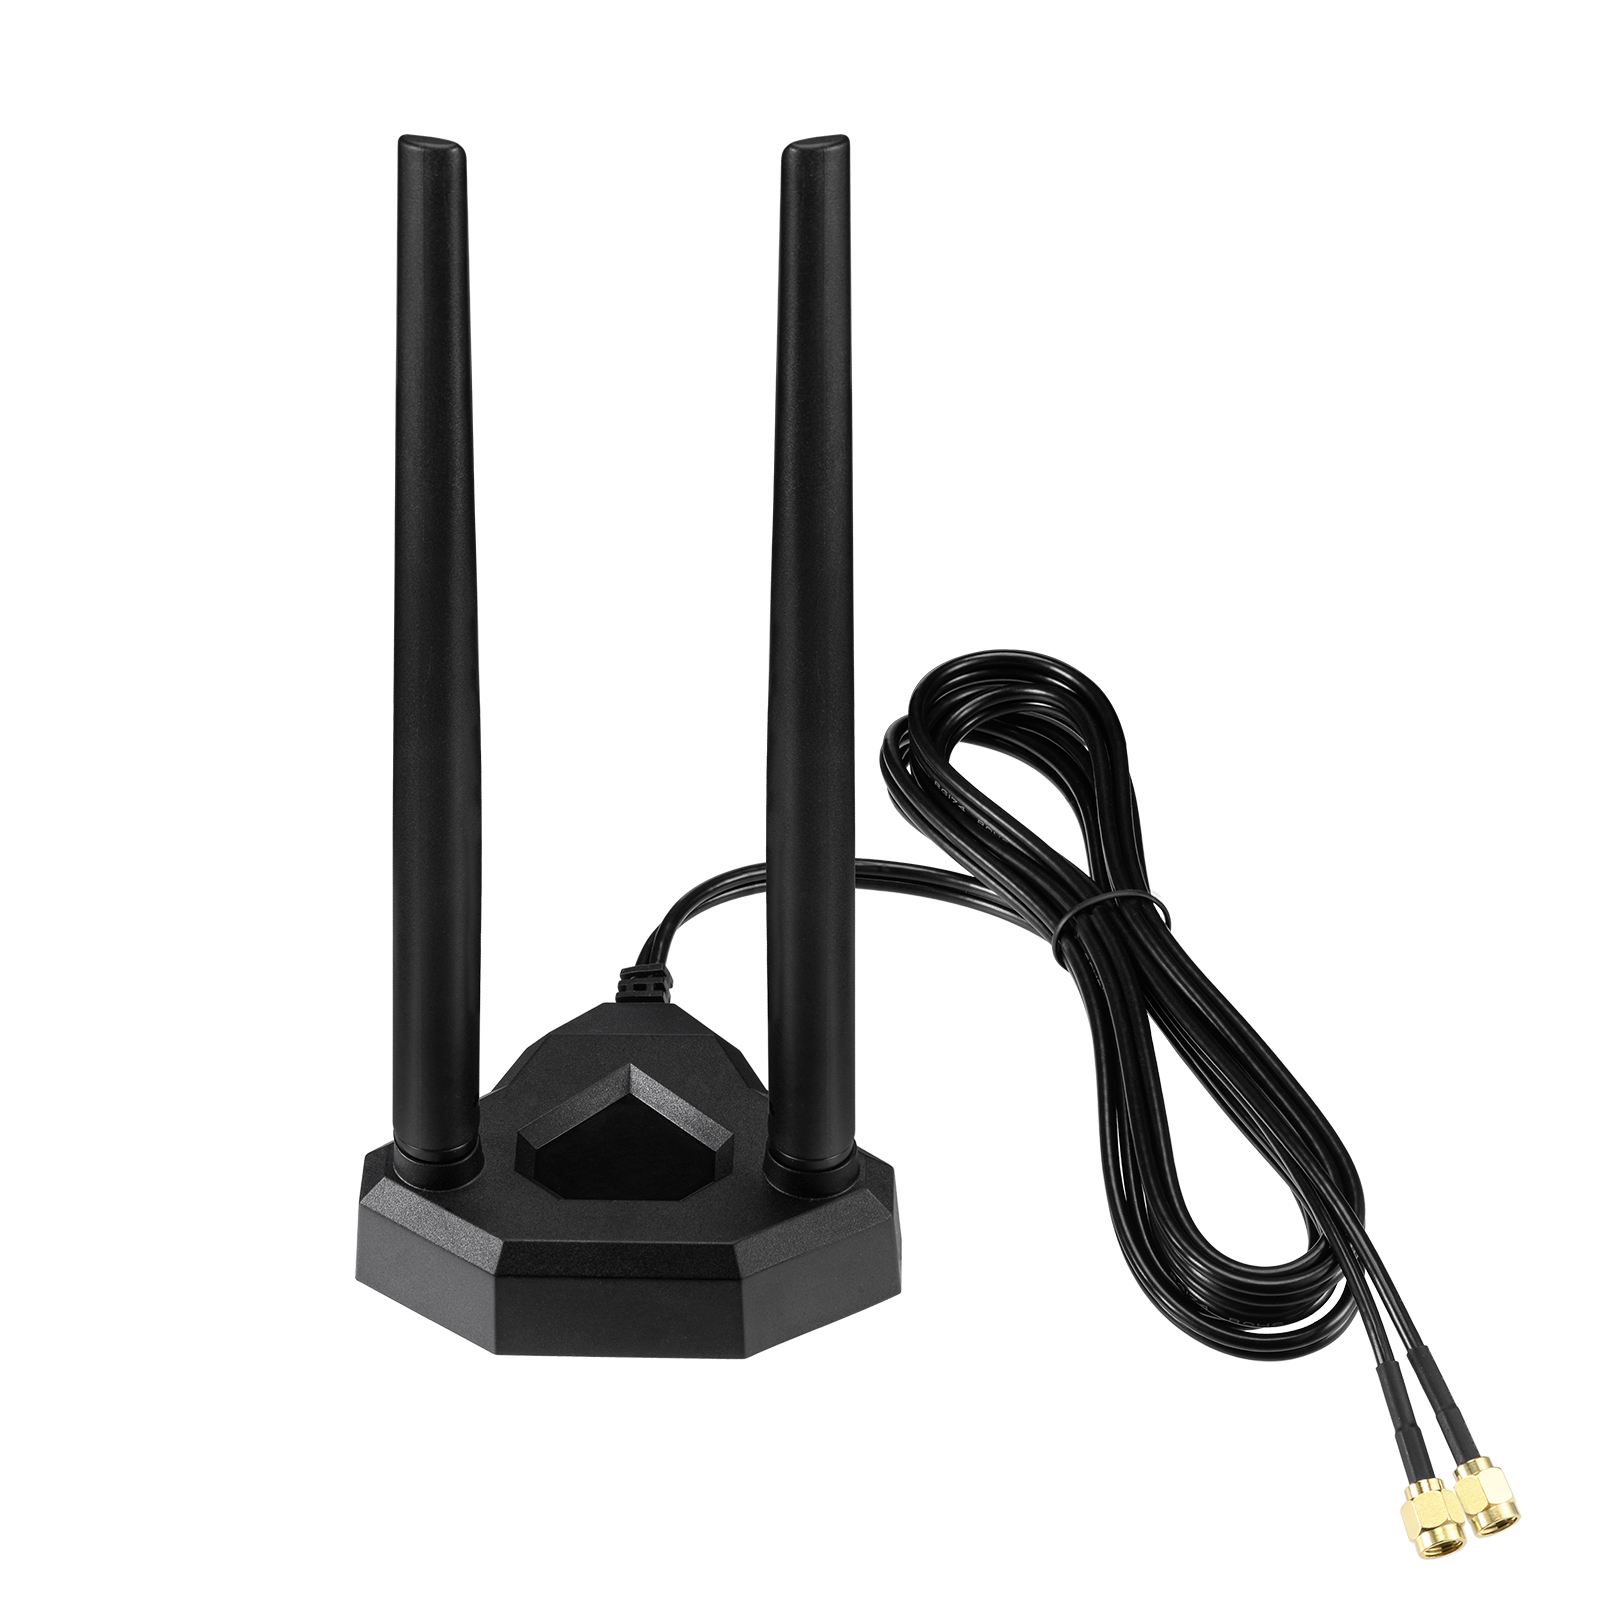 2 6dBi Dual Band WiFi RP-SMA flat Antenna Omni Directional for Buffalo Router 